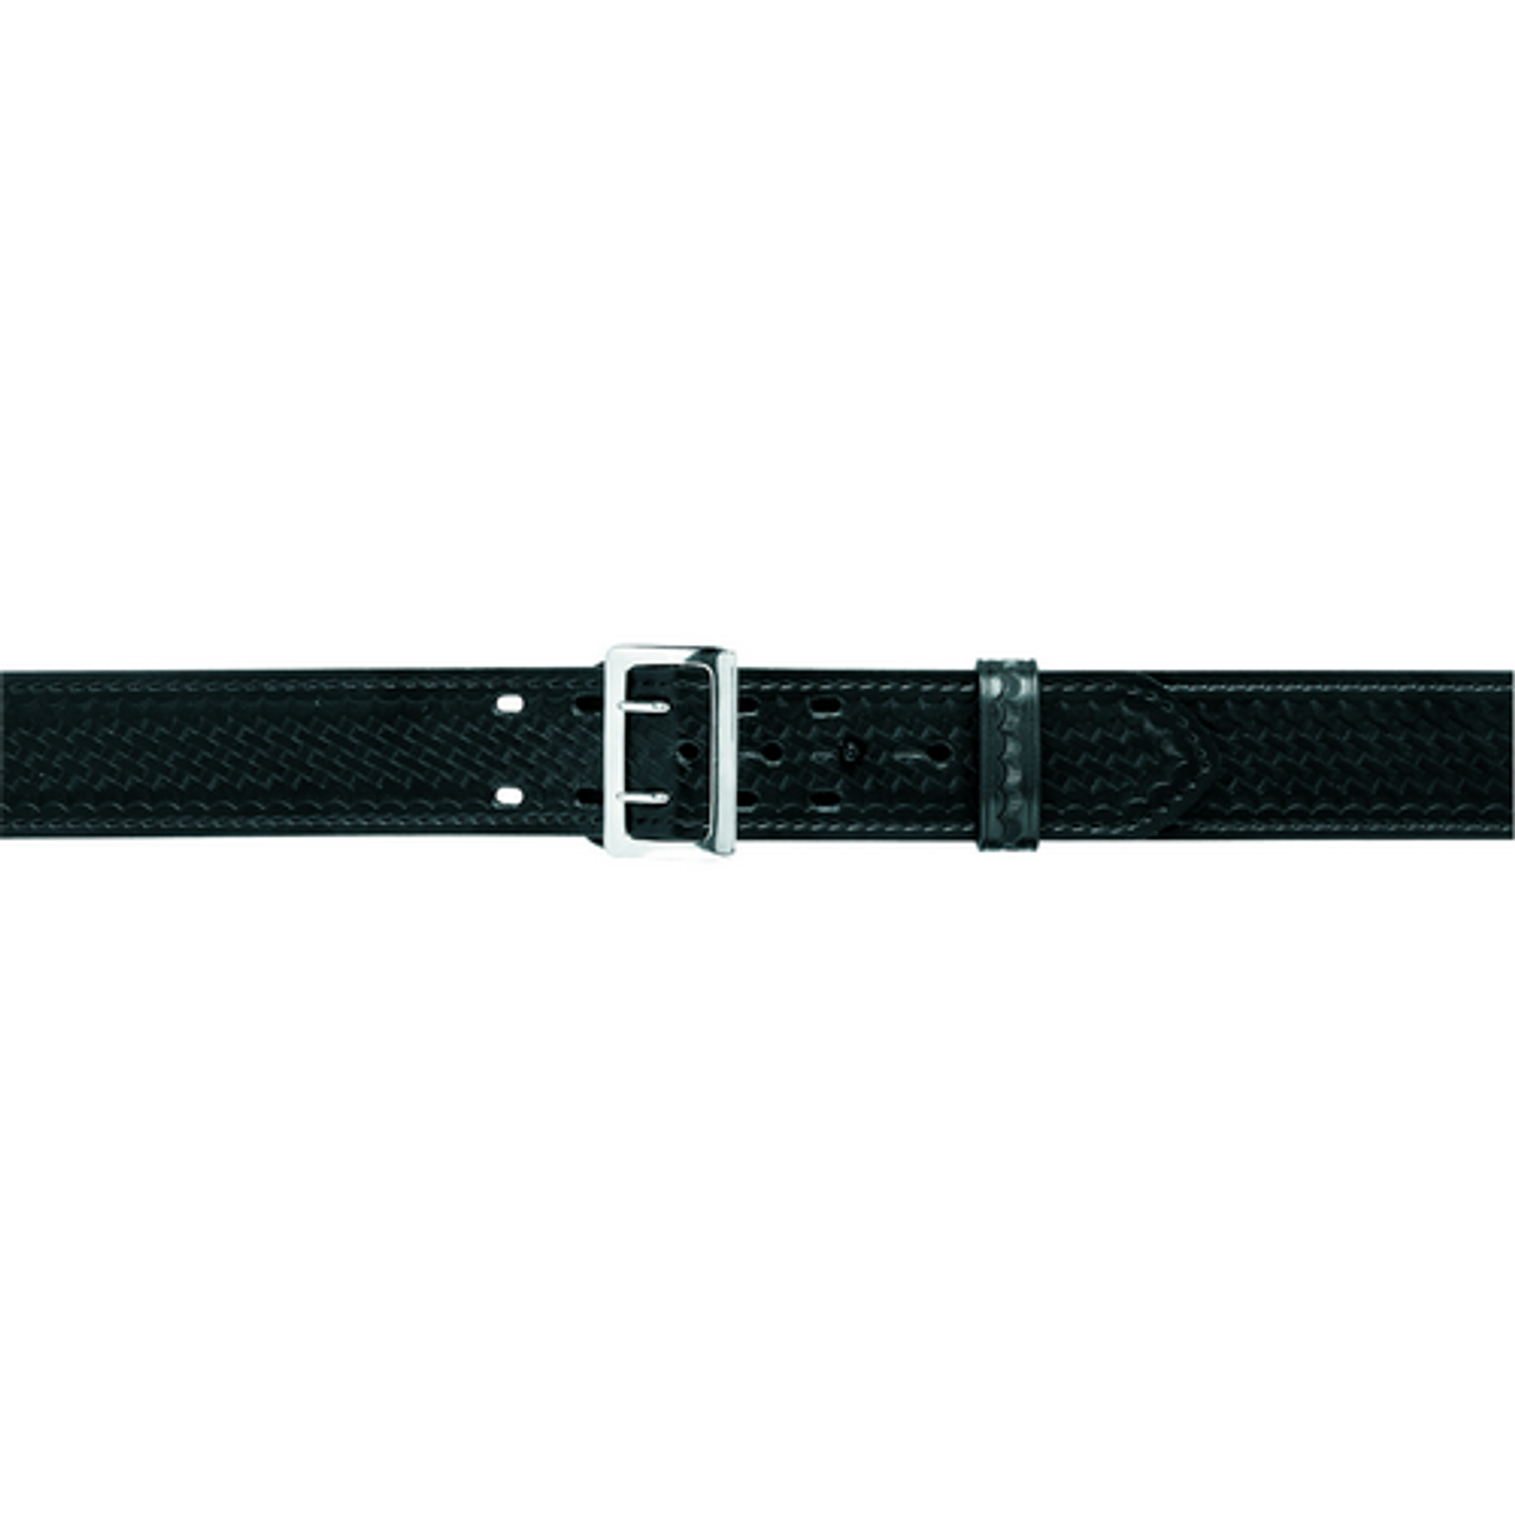 87 - Sam Browne Buckled Duty Belt, 2.25 (58mm) - KR87-46-9B